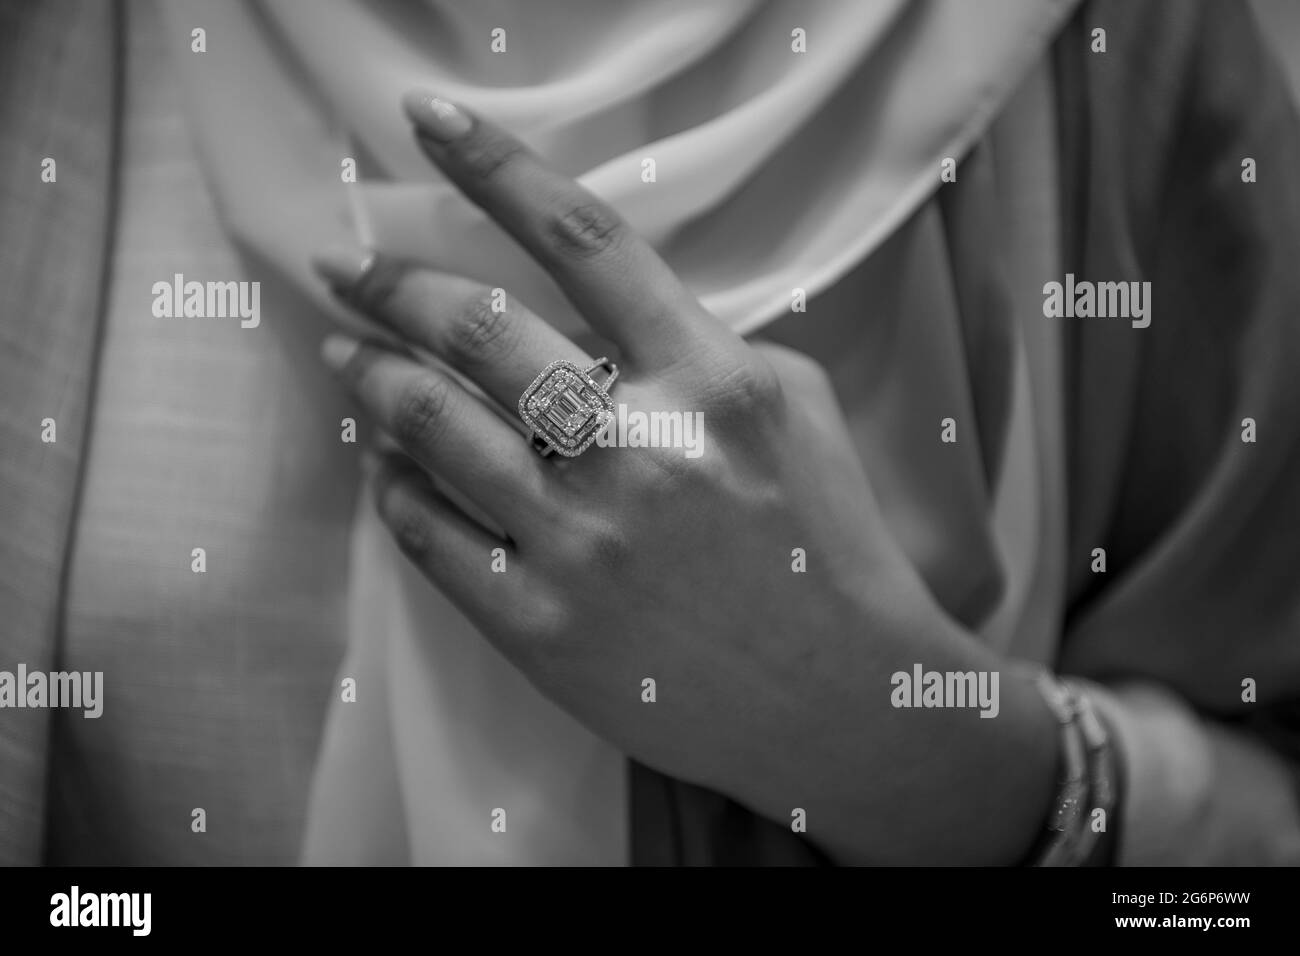 Girl hand trying diamond jewelry at jewelry shop. wearing diamond jewelry Stock Photo